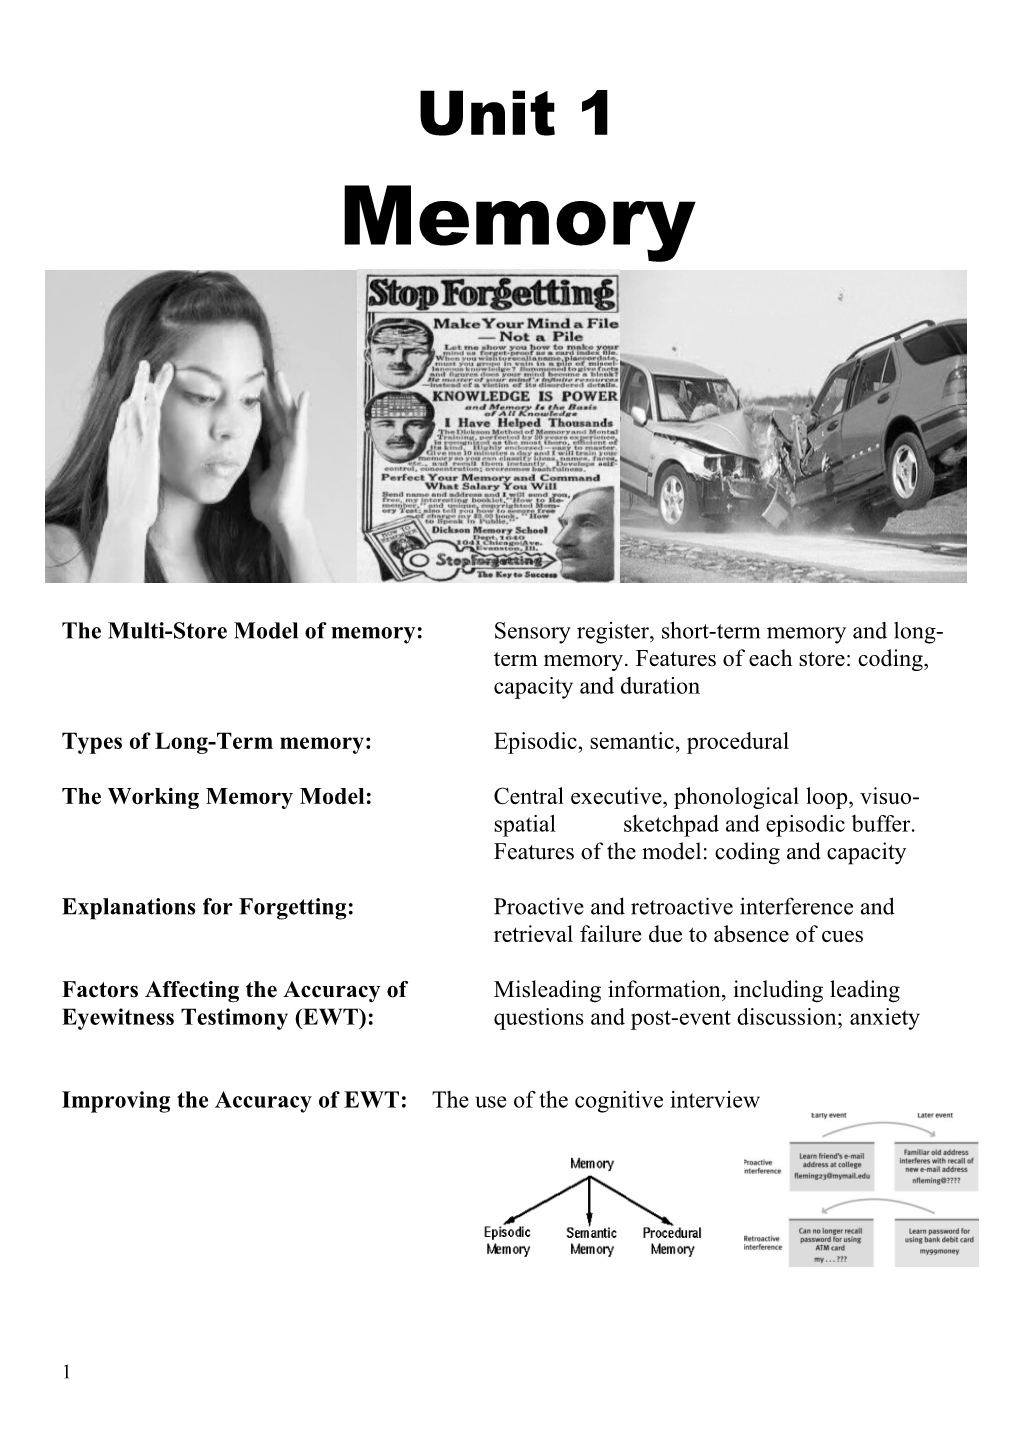 Types of Long-Term Memory: Episodic, Semantic, Procedural